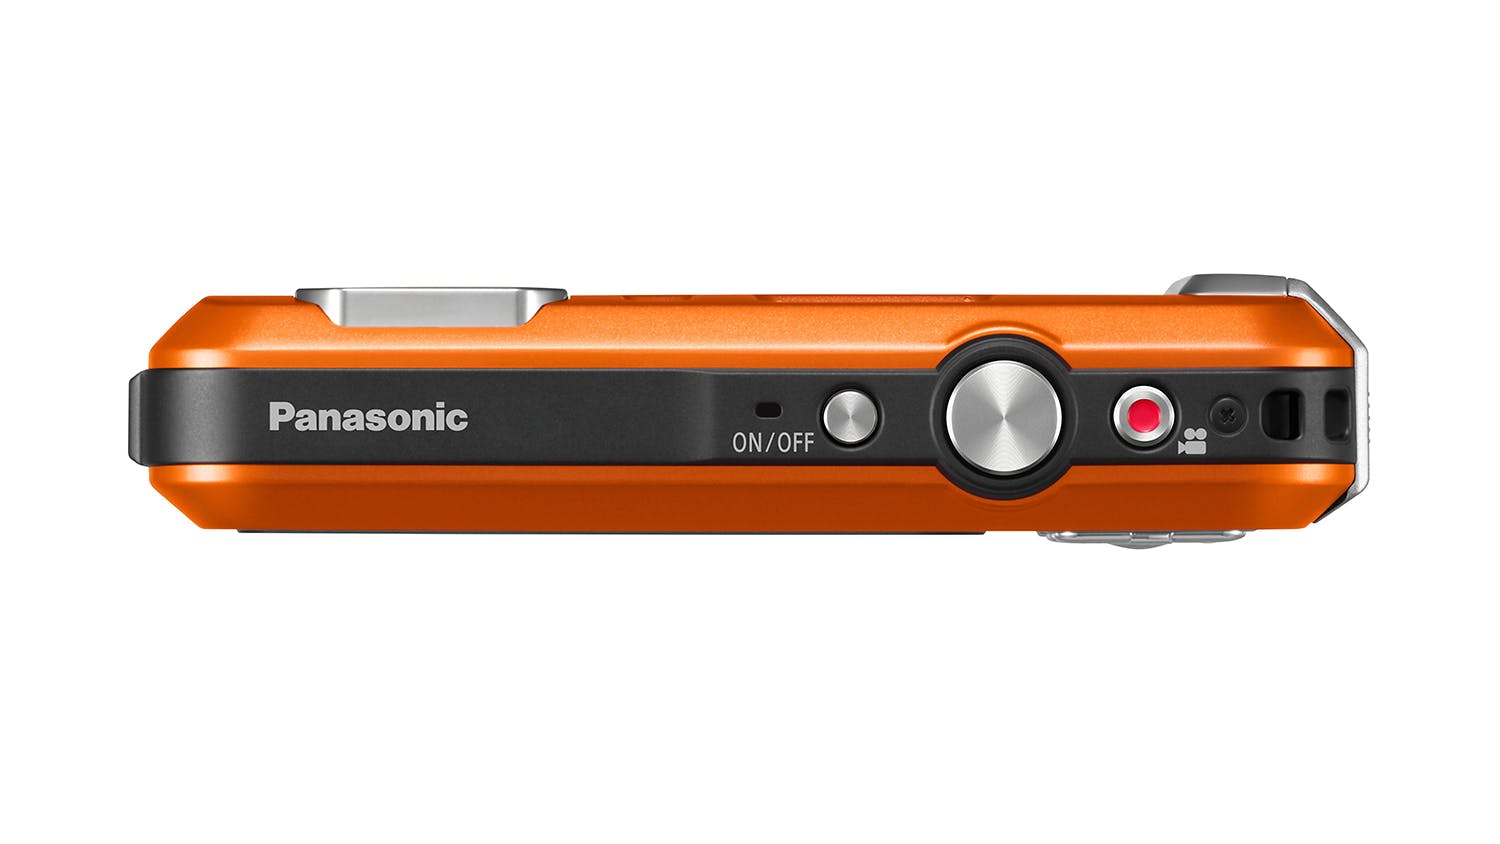 Panasonic Lumix Dmc Ft30 Tough Digital Camera Orange Harvey Norman New Zealand